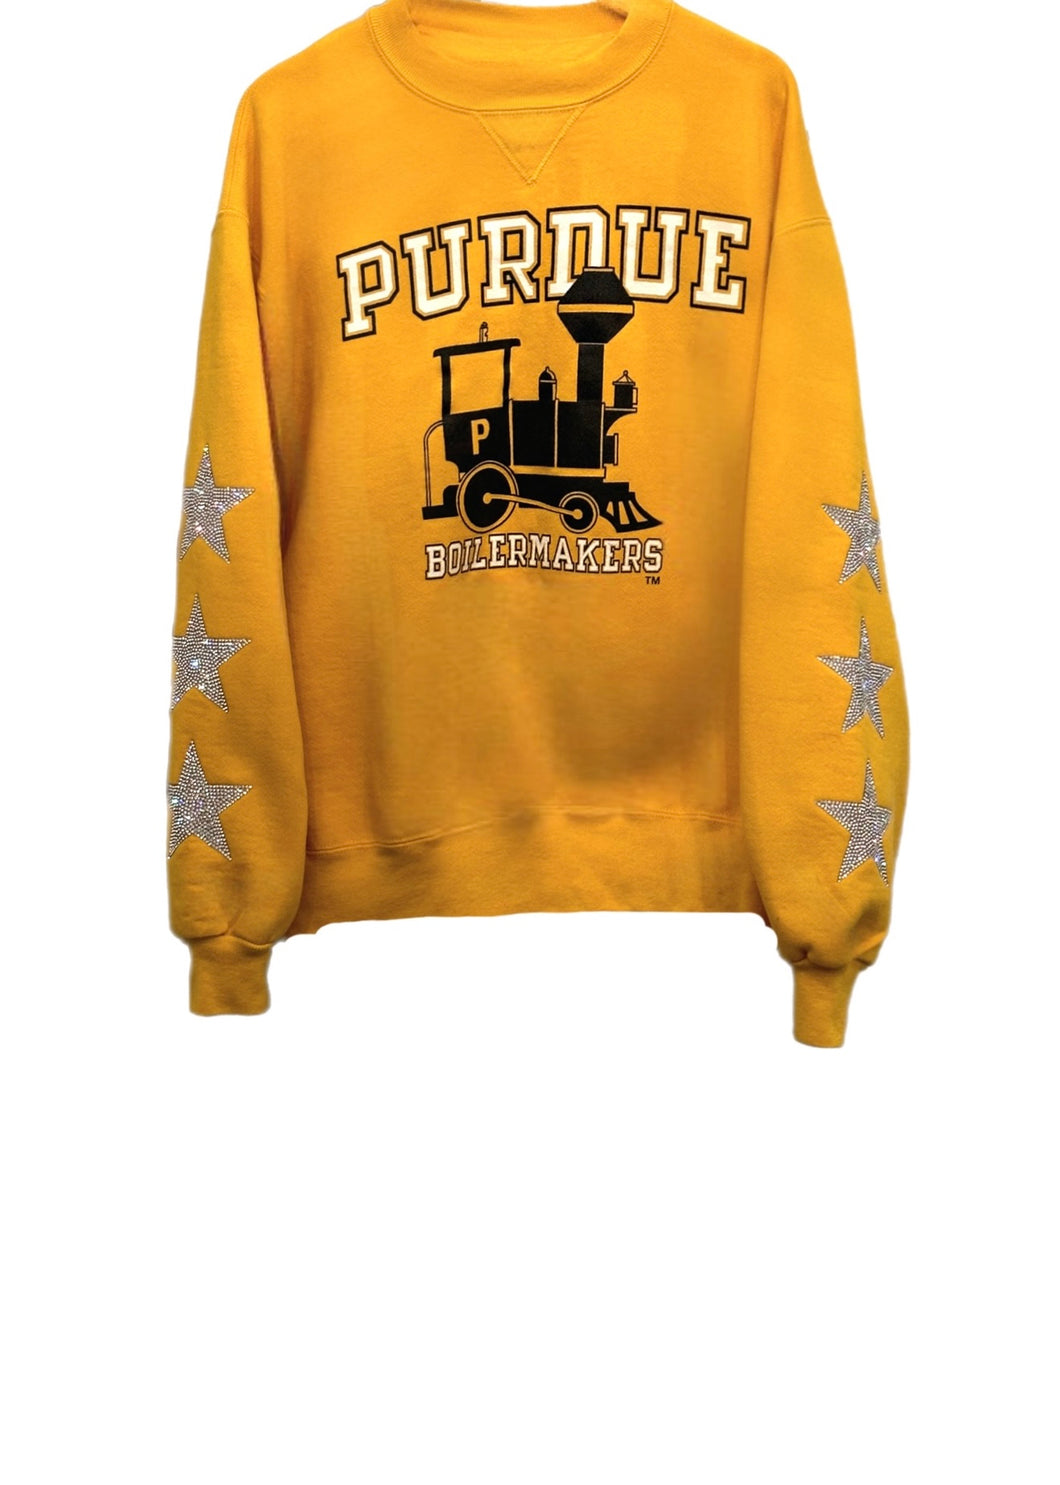 Purdue University, One of a KIND Vintage Sweatshirt with Three Crystal Star Design